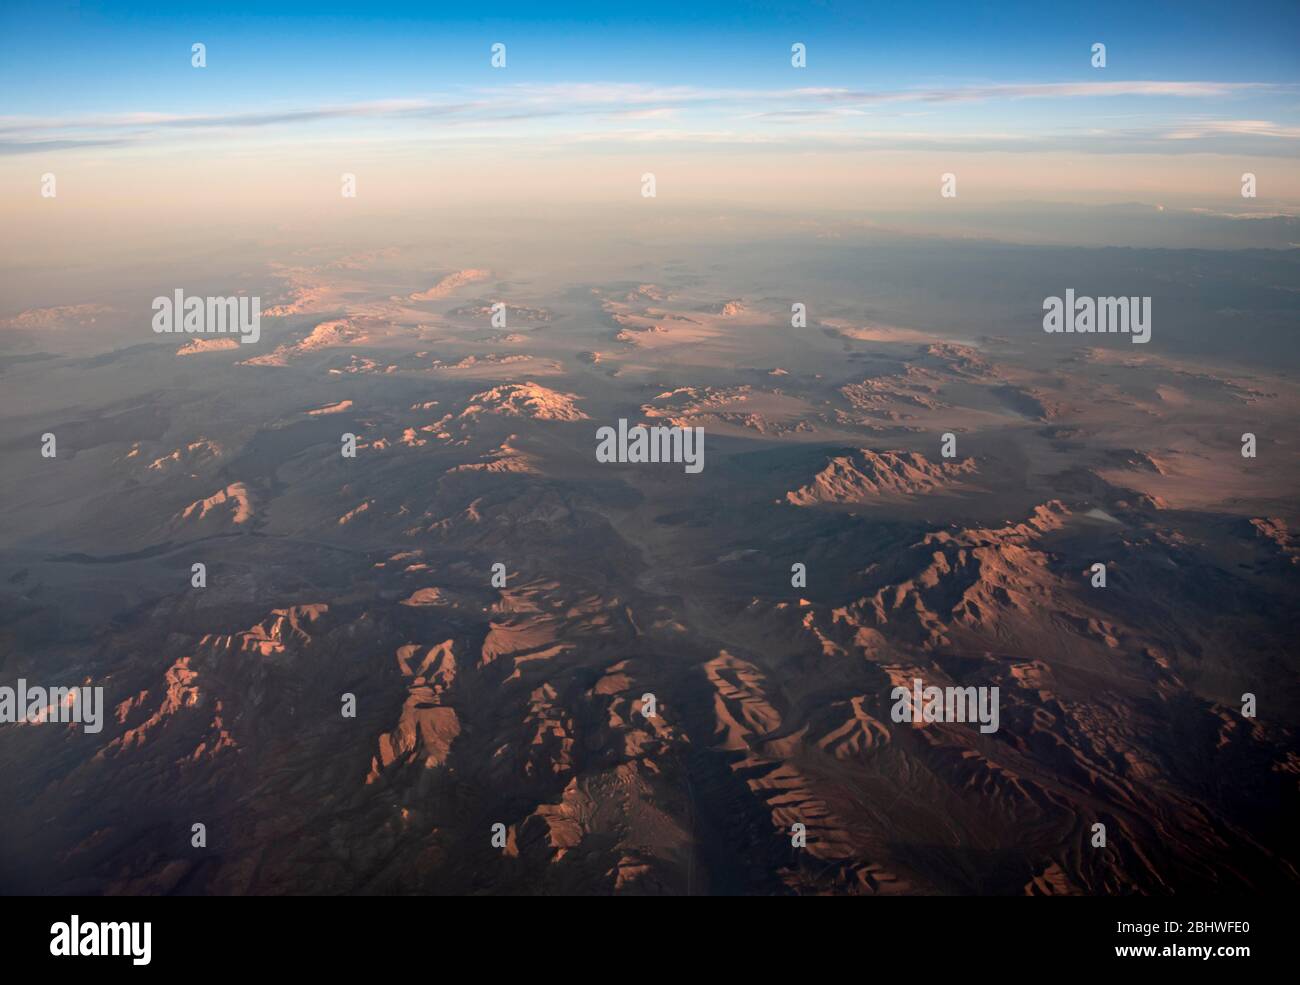 Barren desert landscape with mountains, aerial view, Mojave Desert, California, USA Stock Photo